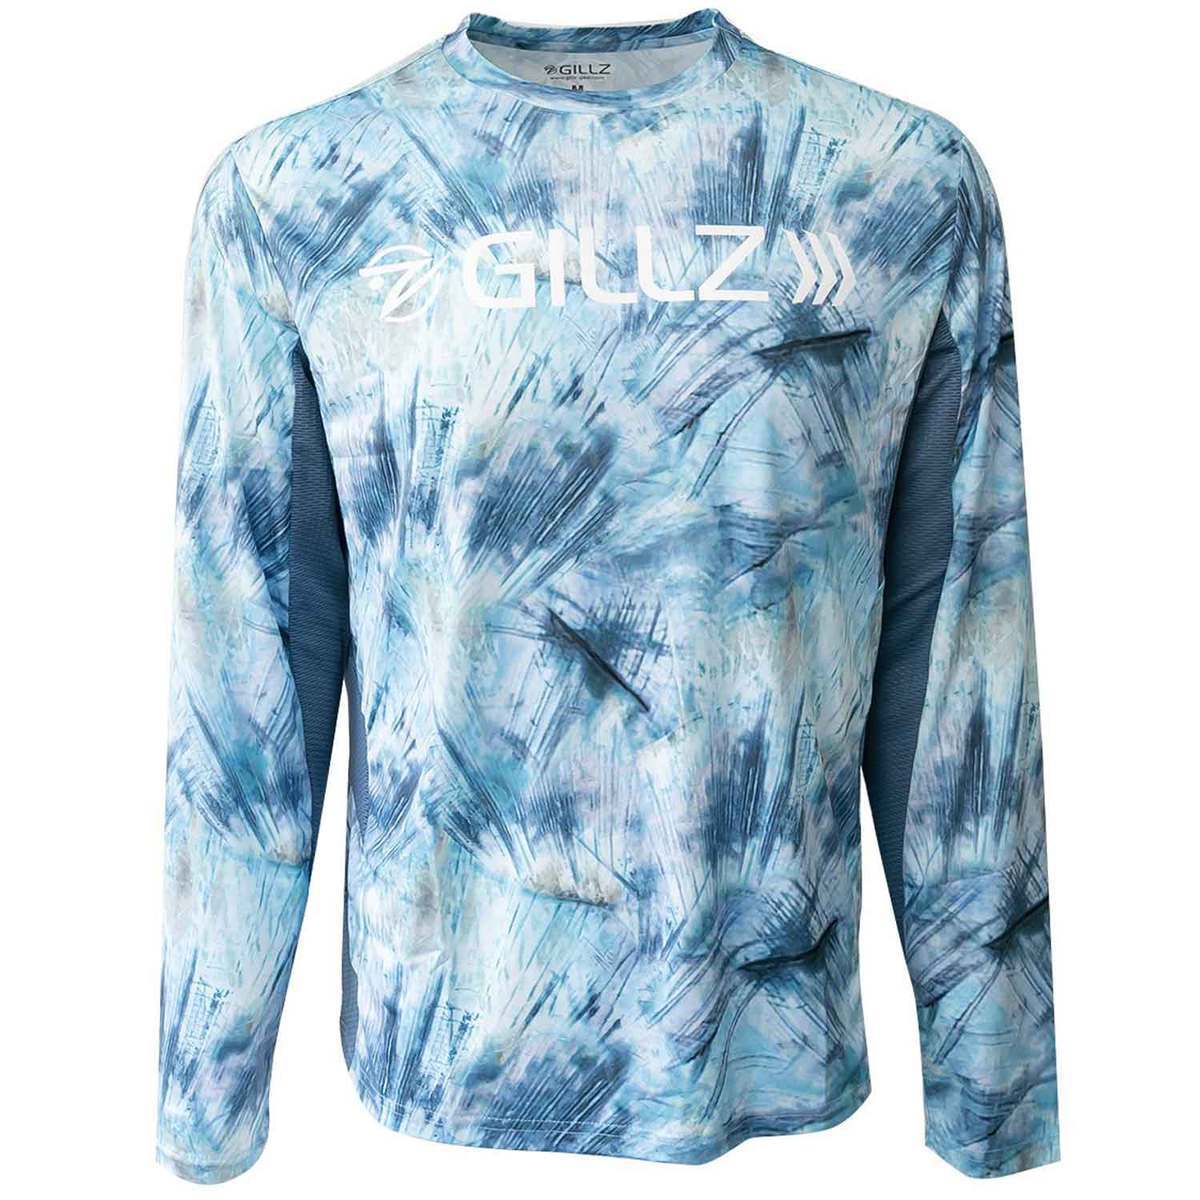 Gillz Men's Waterman UV Series V3 Long Sleeve Shirt